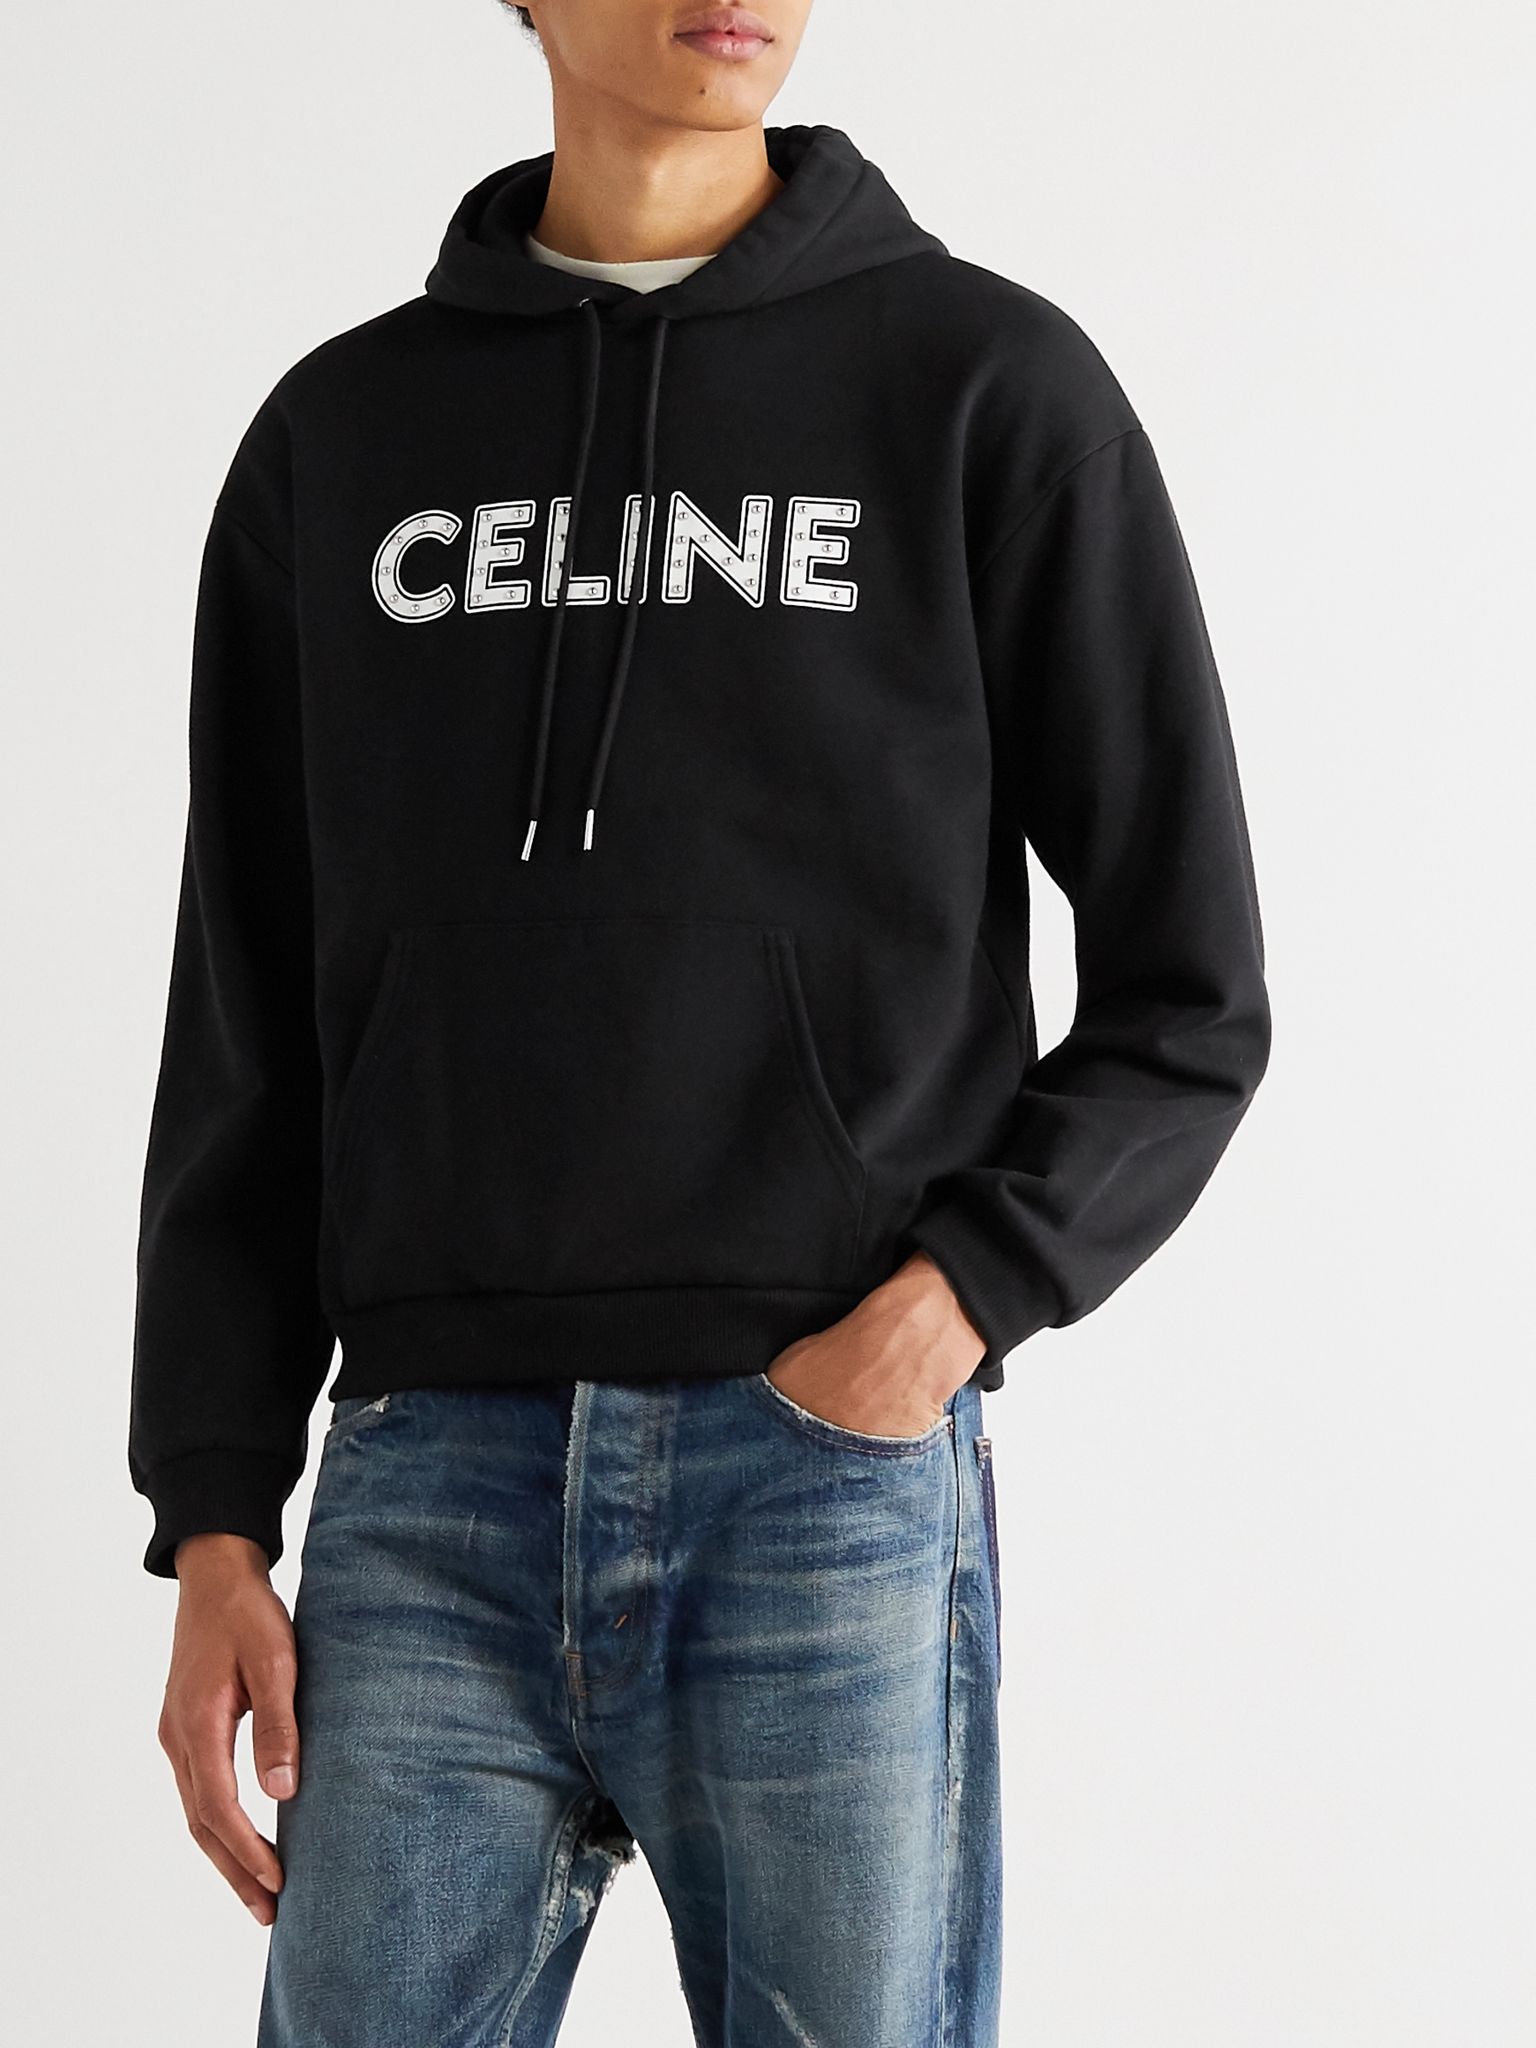 Black Celine-Printed Studded Cotton Hooded Sweatshirt | CELINE HOMME ...